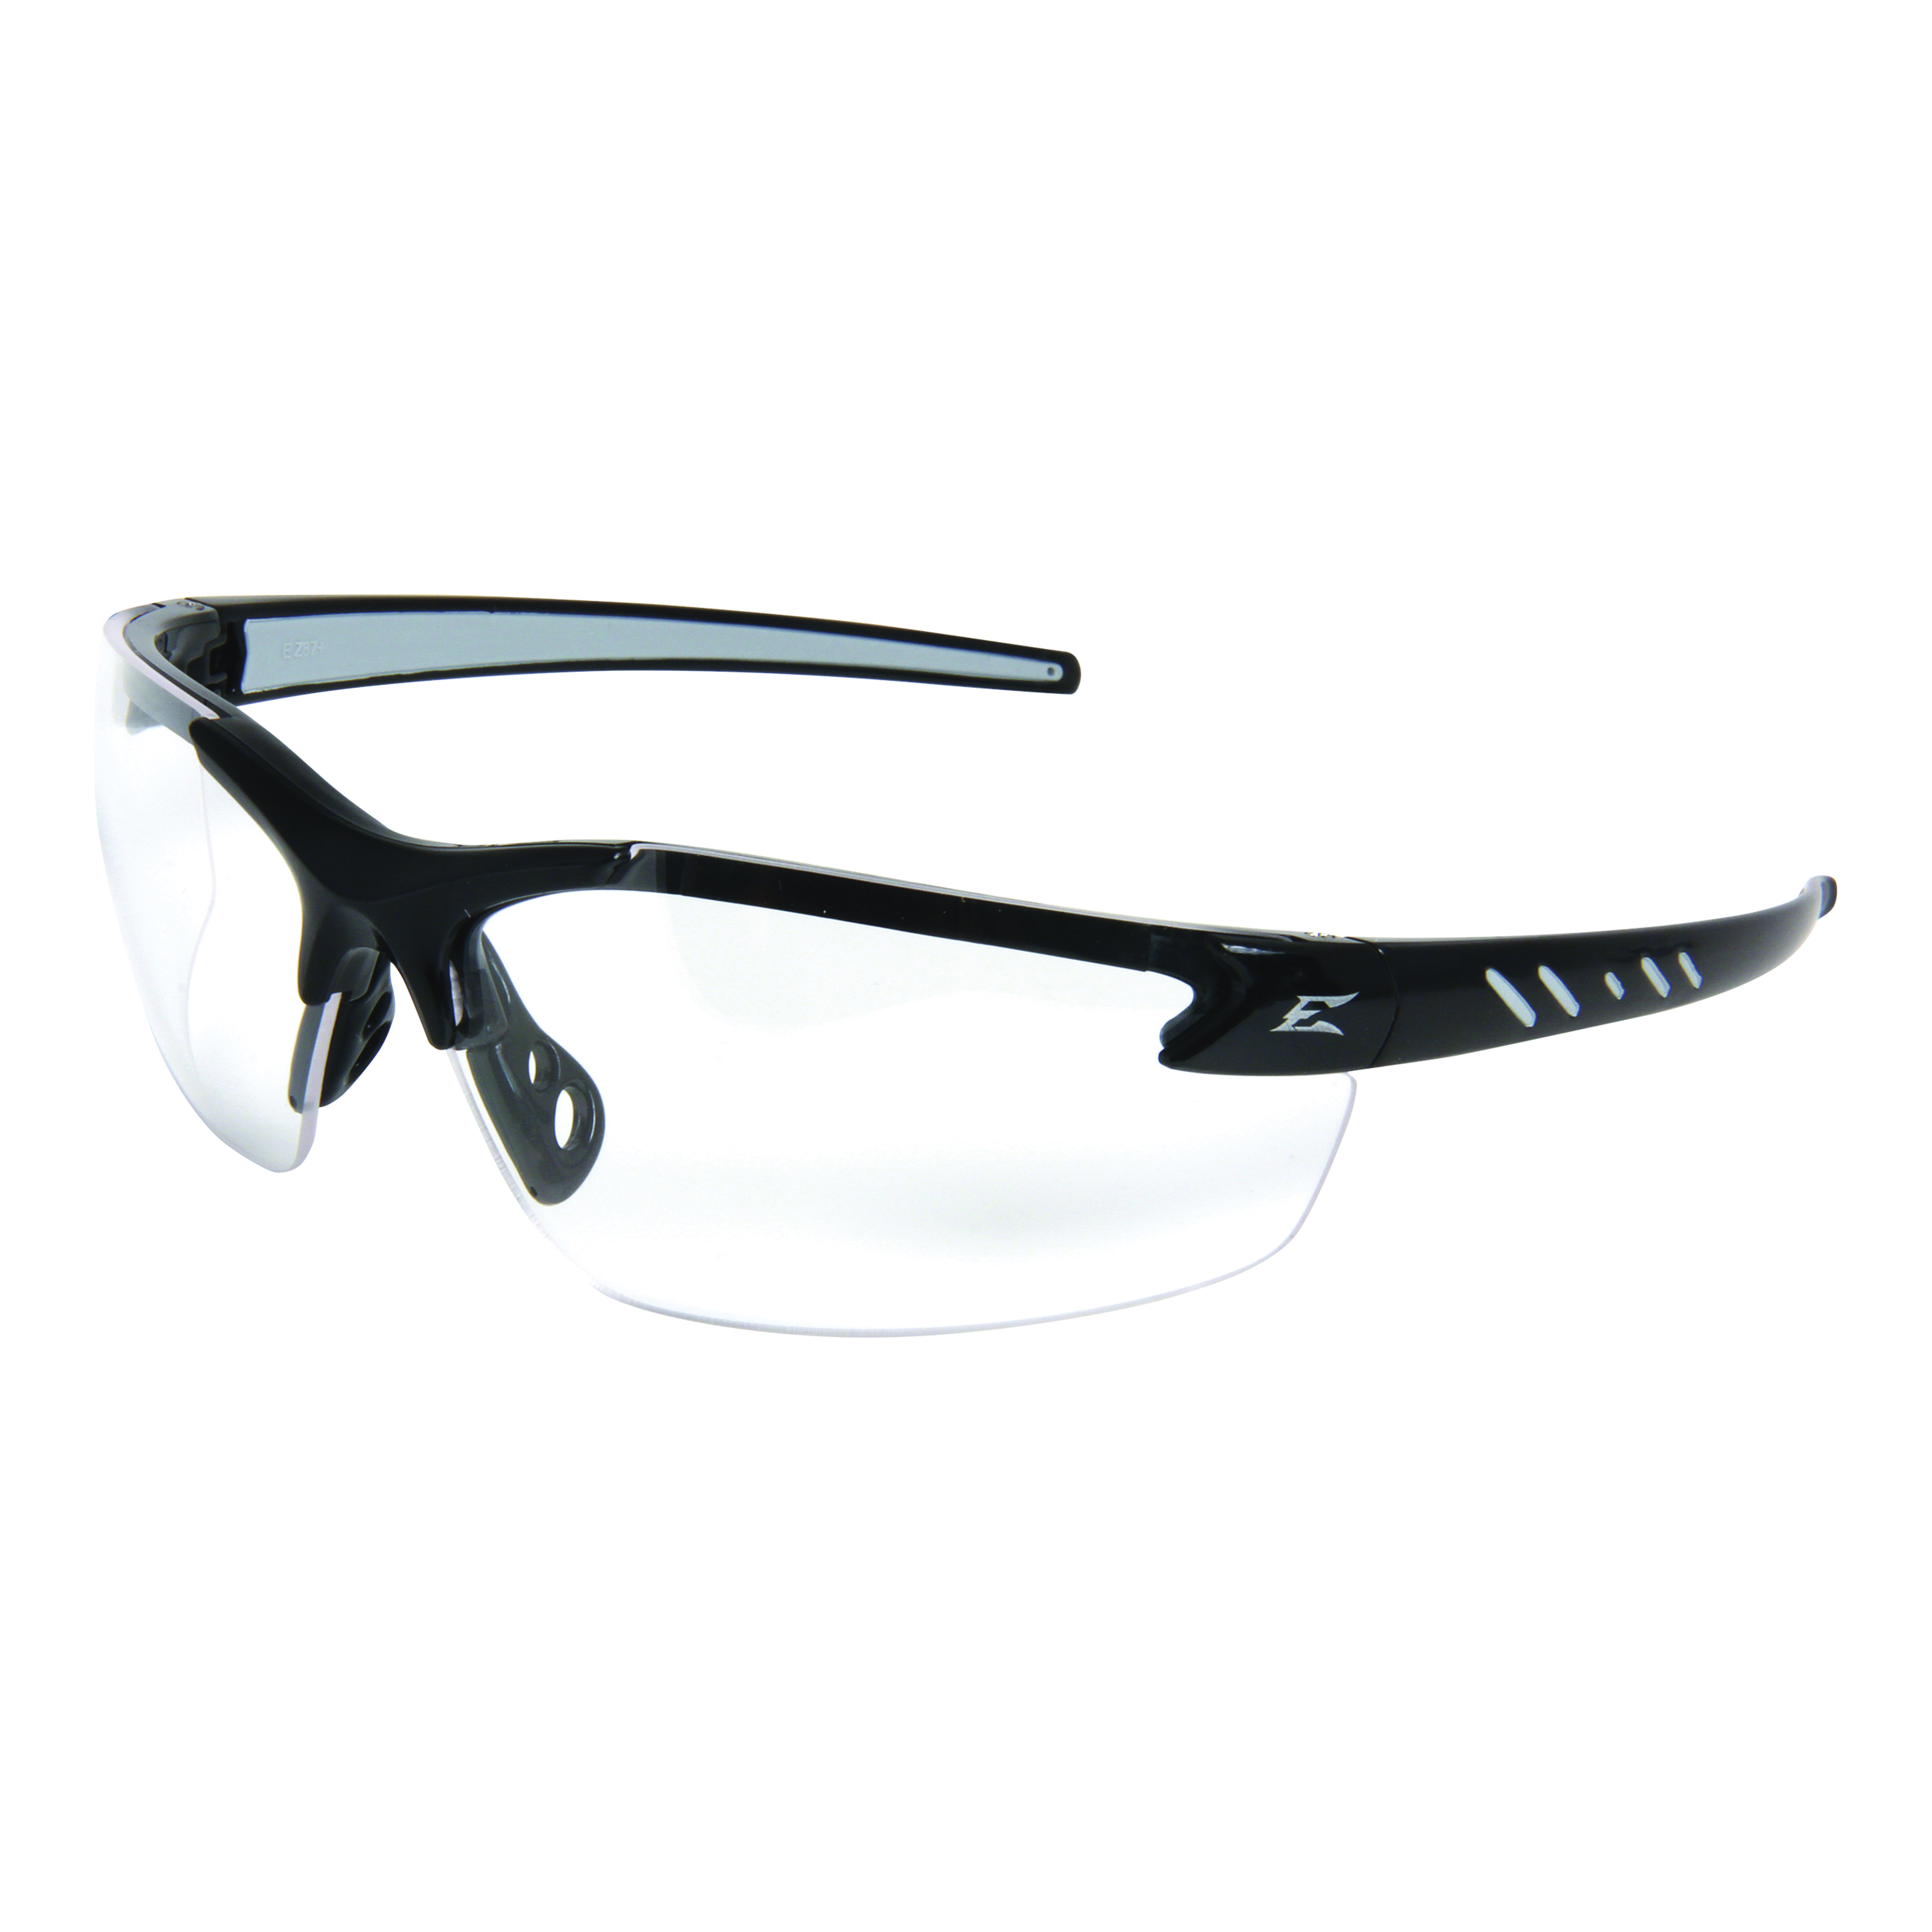 DZ111-2.0-G2 Magnifier Safety Glasses, Polycarbonate Lens, Half Wraparound Frame, Nylon Frame